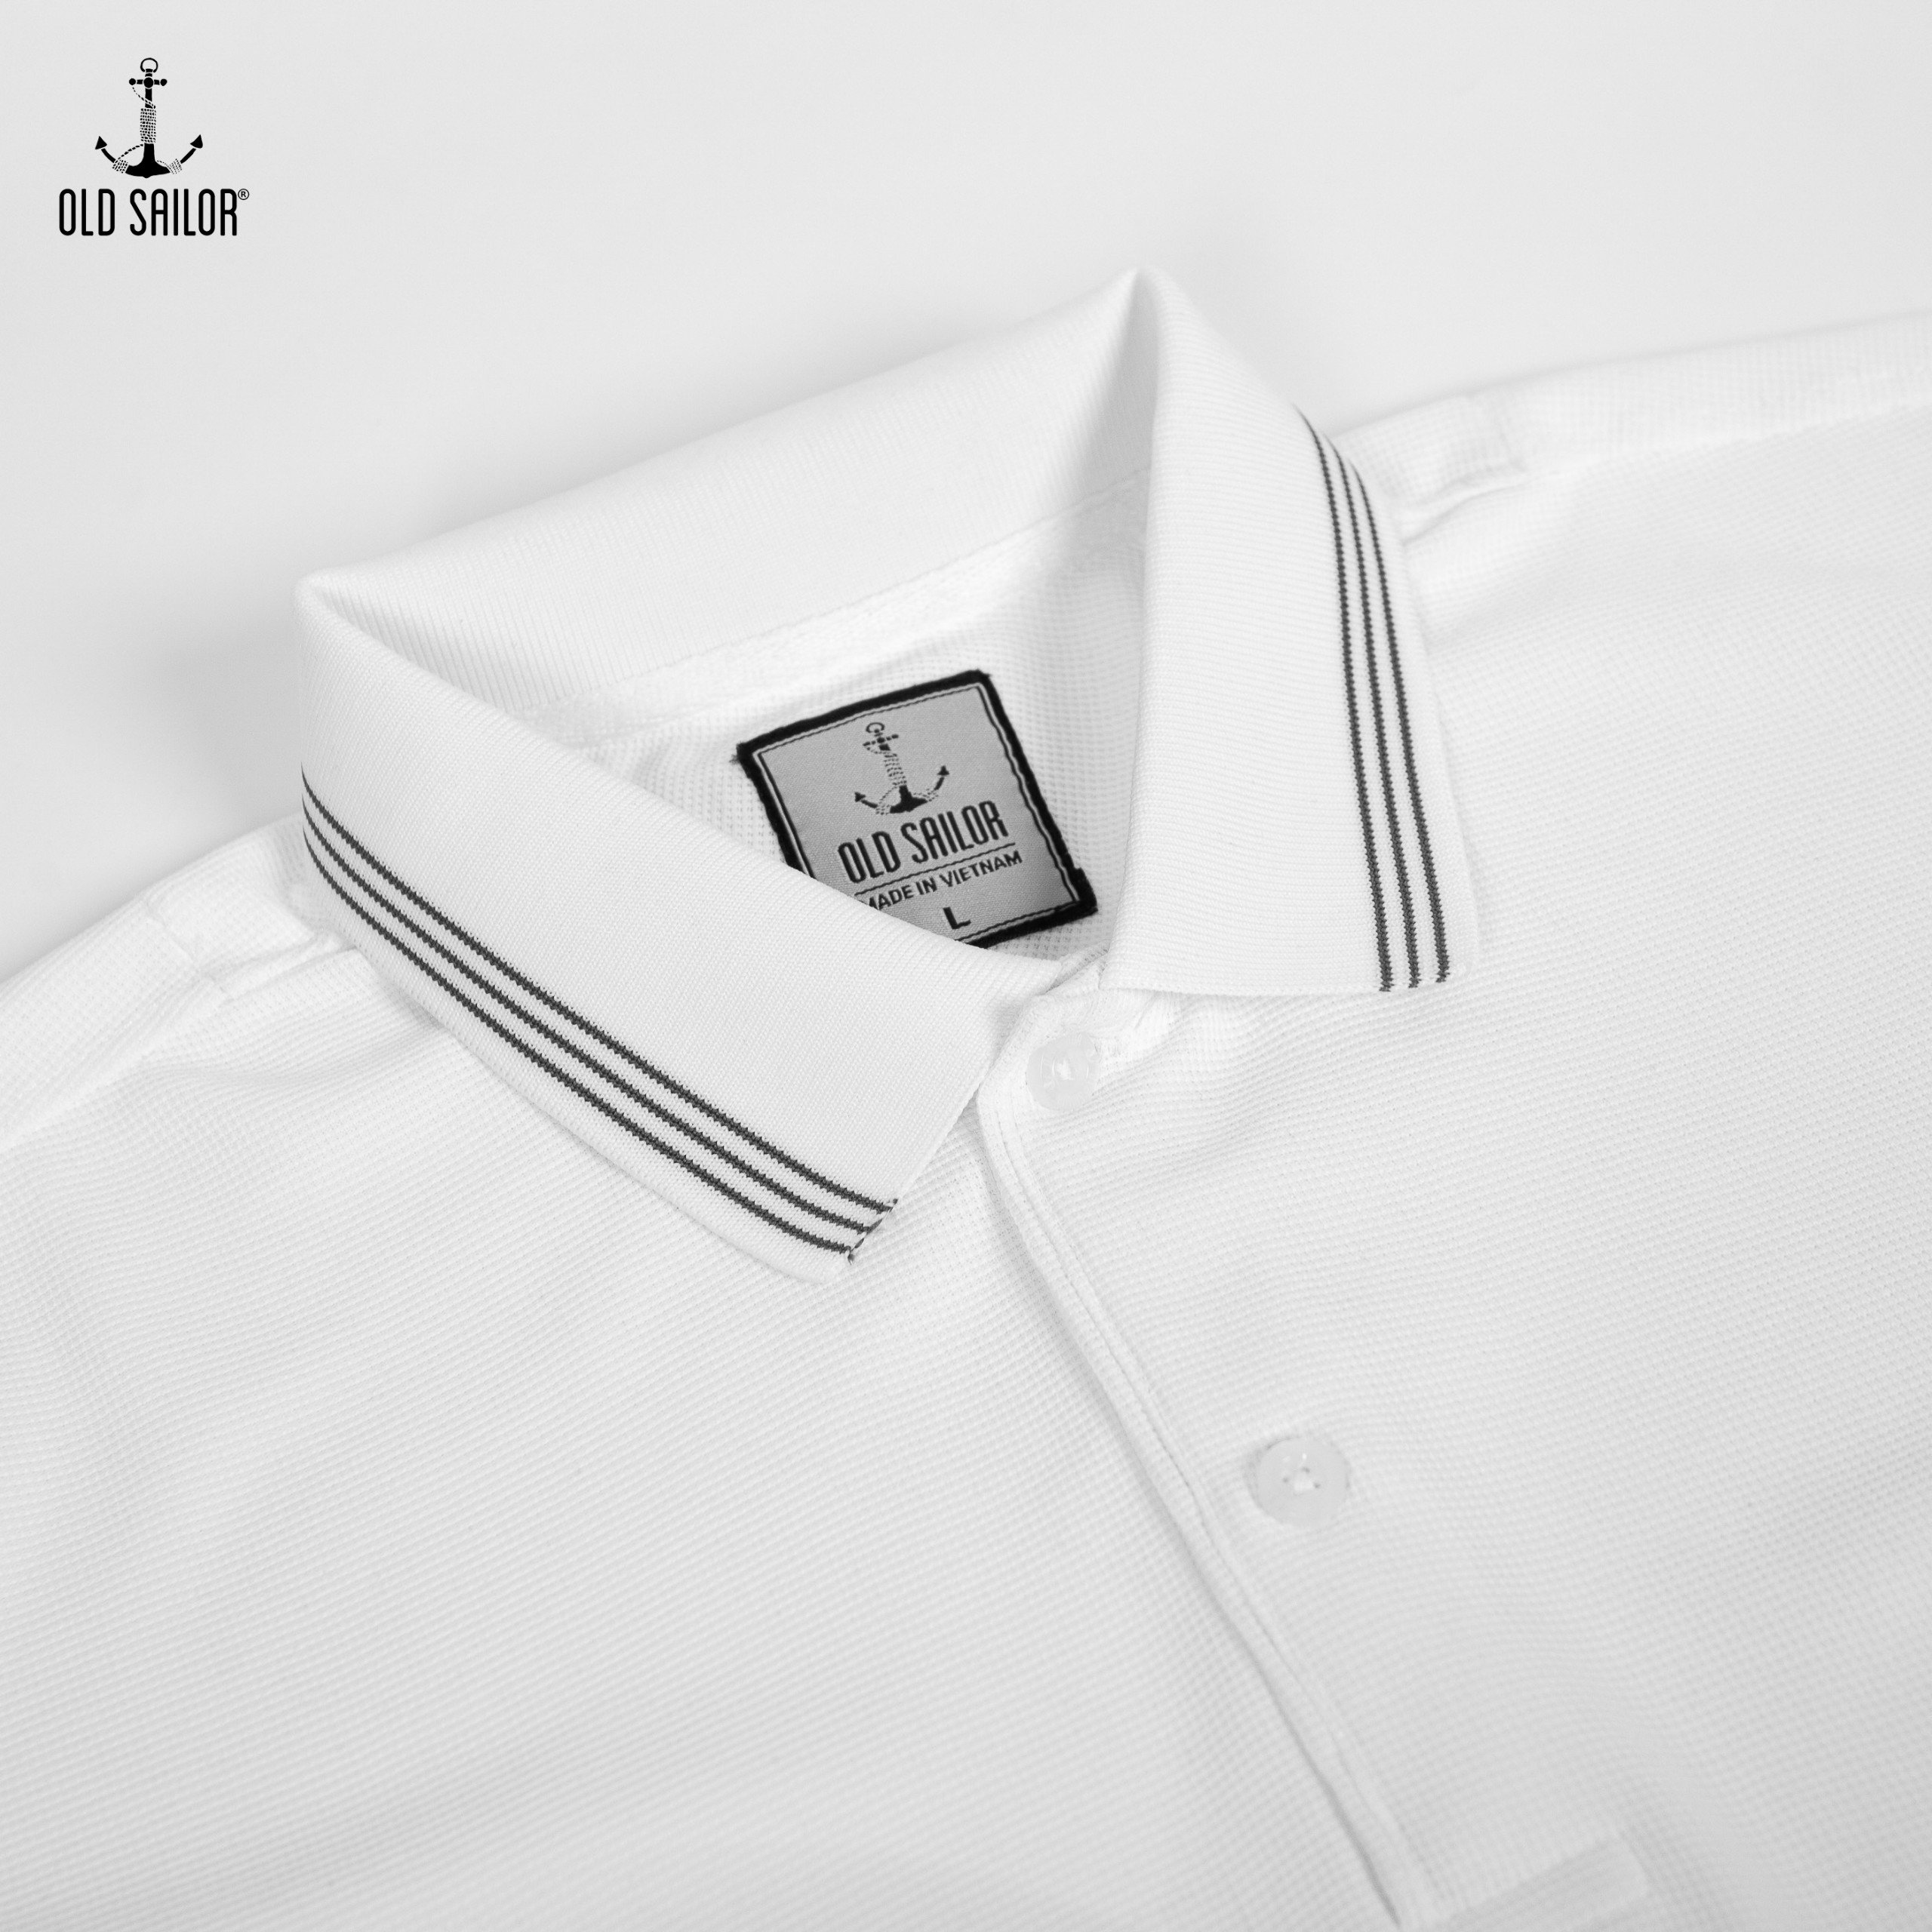 Áo polo phối cổ Old Sailor - white - PLGA88563 - trắng - Big size upto 5XL